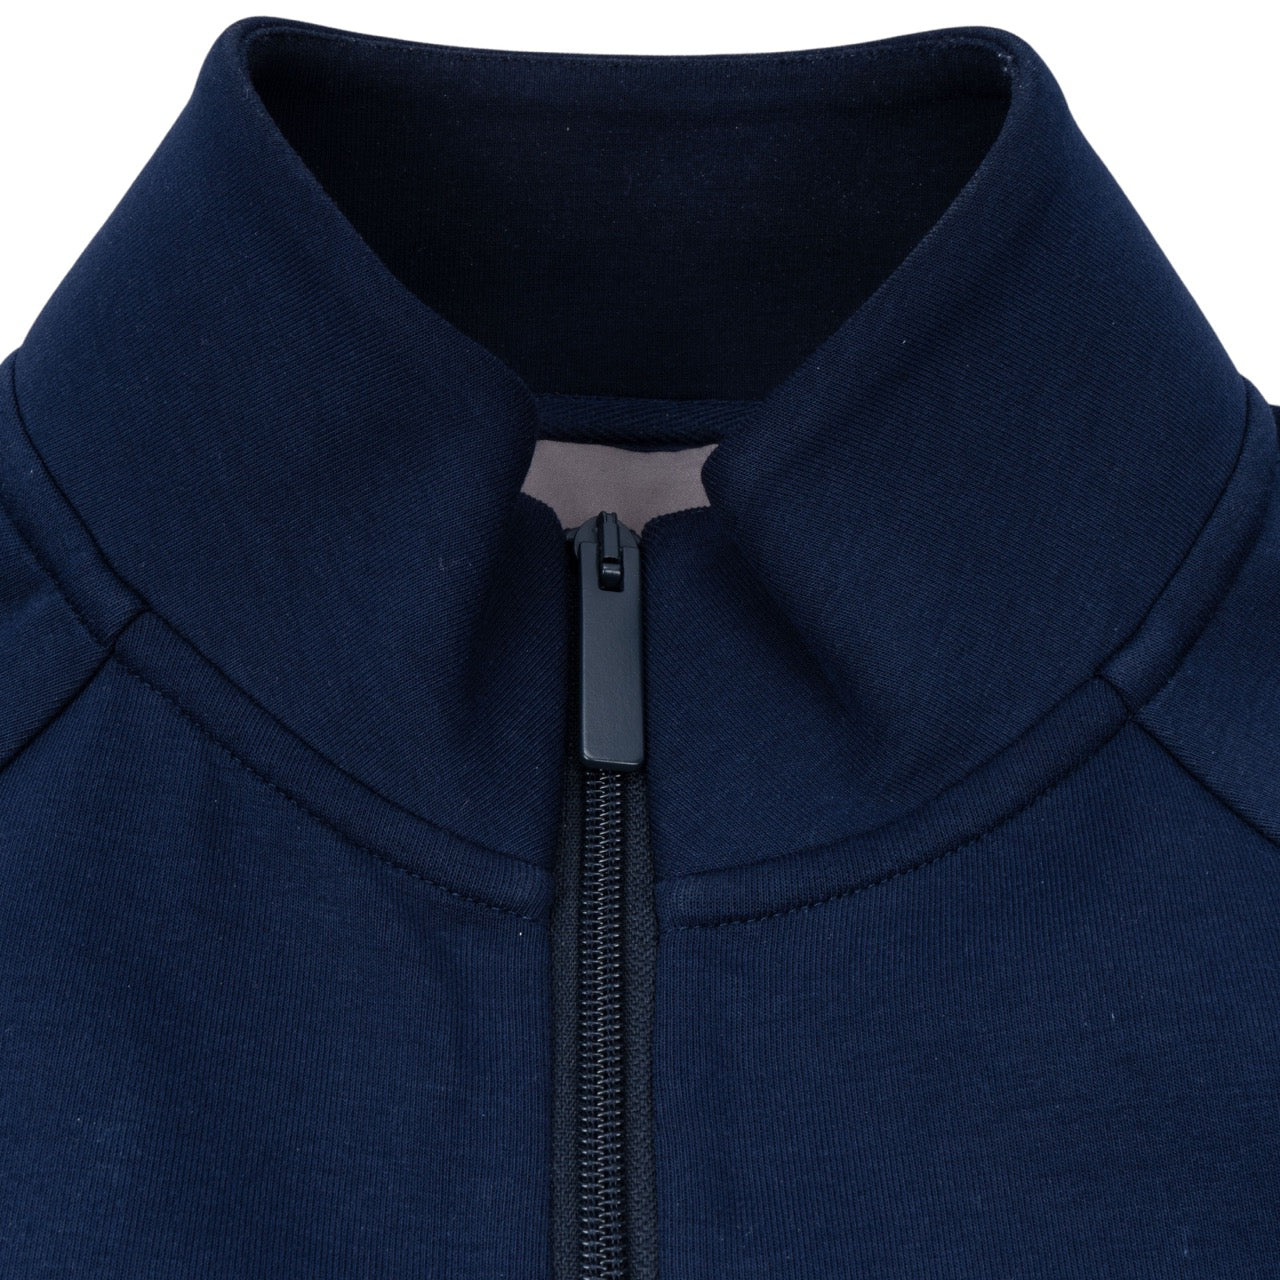 Prada Luna Rossa Pirelli Zip Sweater (XL)